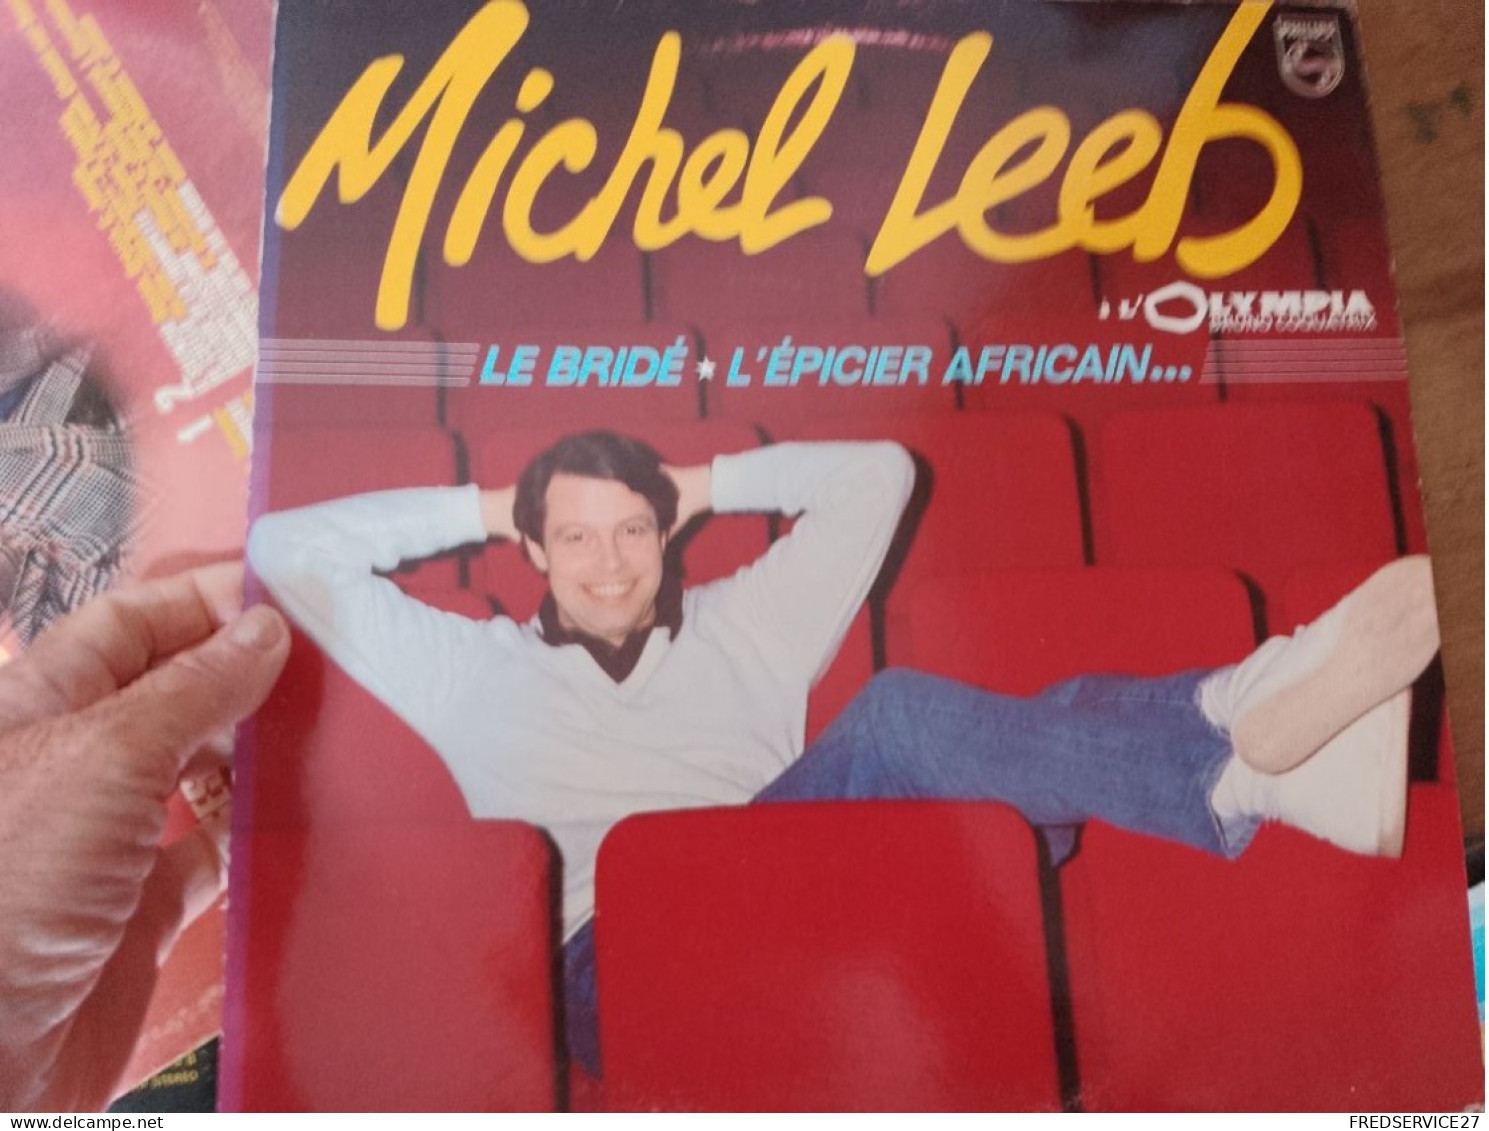 89 //  MICHEL LEEB A L'OLYMPIA / LE BRIDE / L'EPICIER AFRICAIN..... - Humor, Cabaret